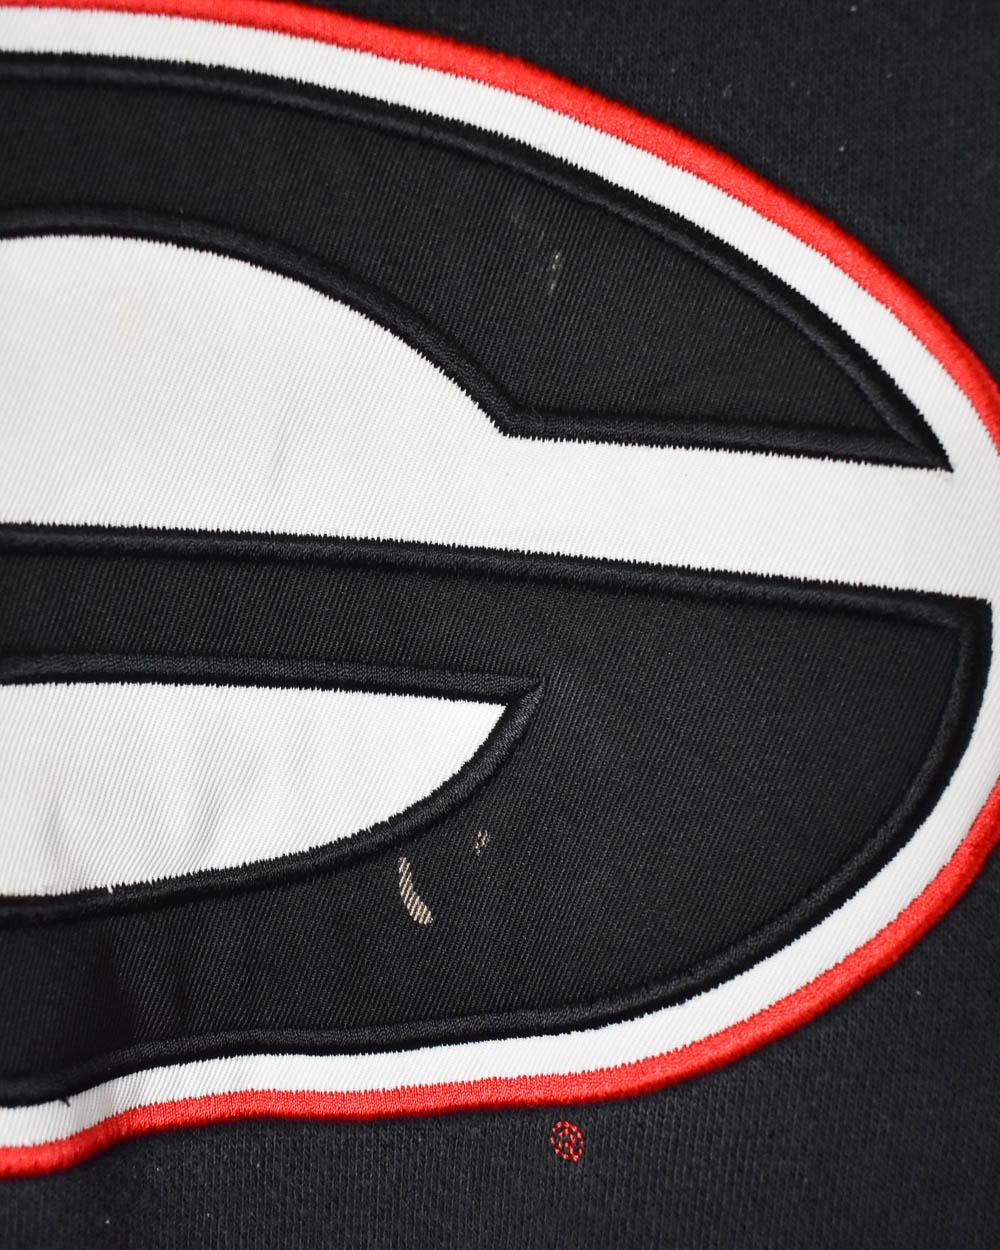 Black Nike Team Georgia Tech Hoodie - Medium